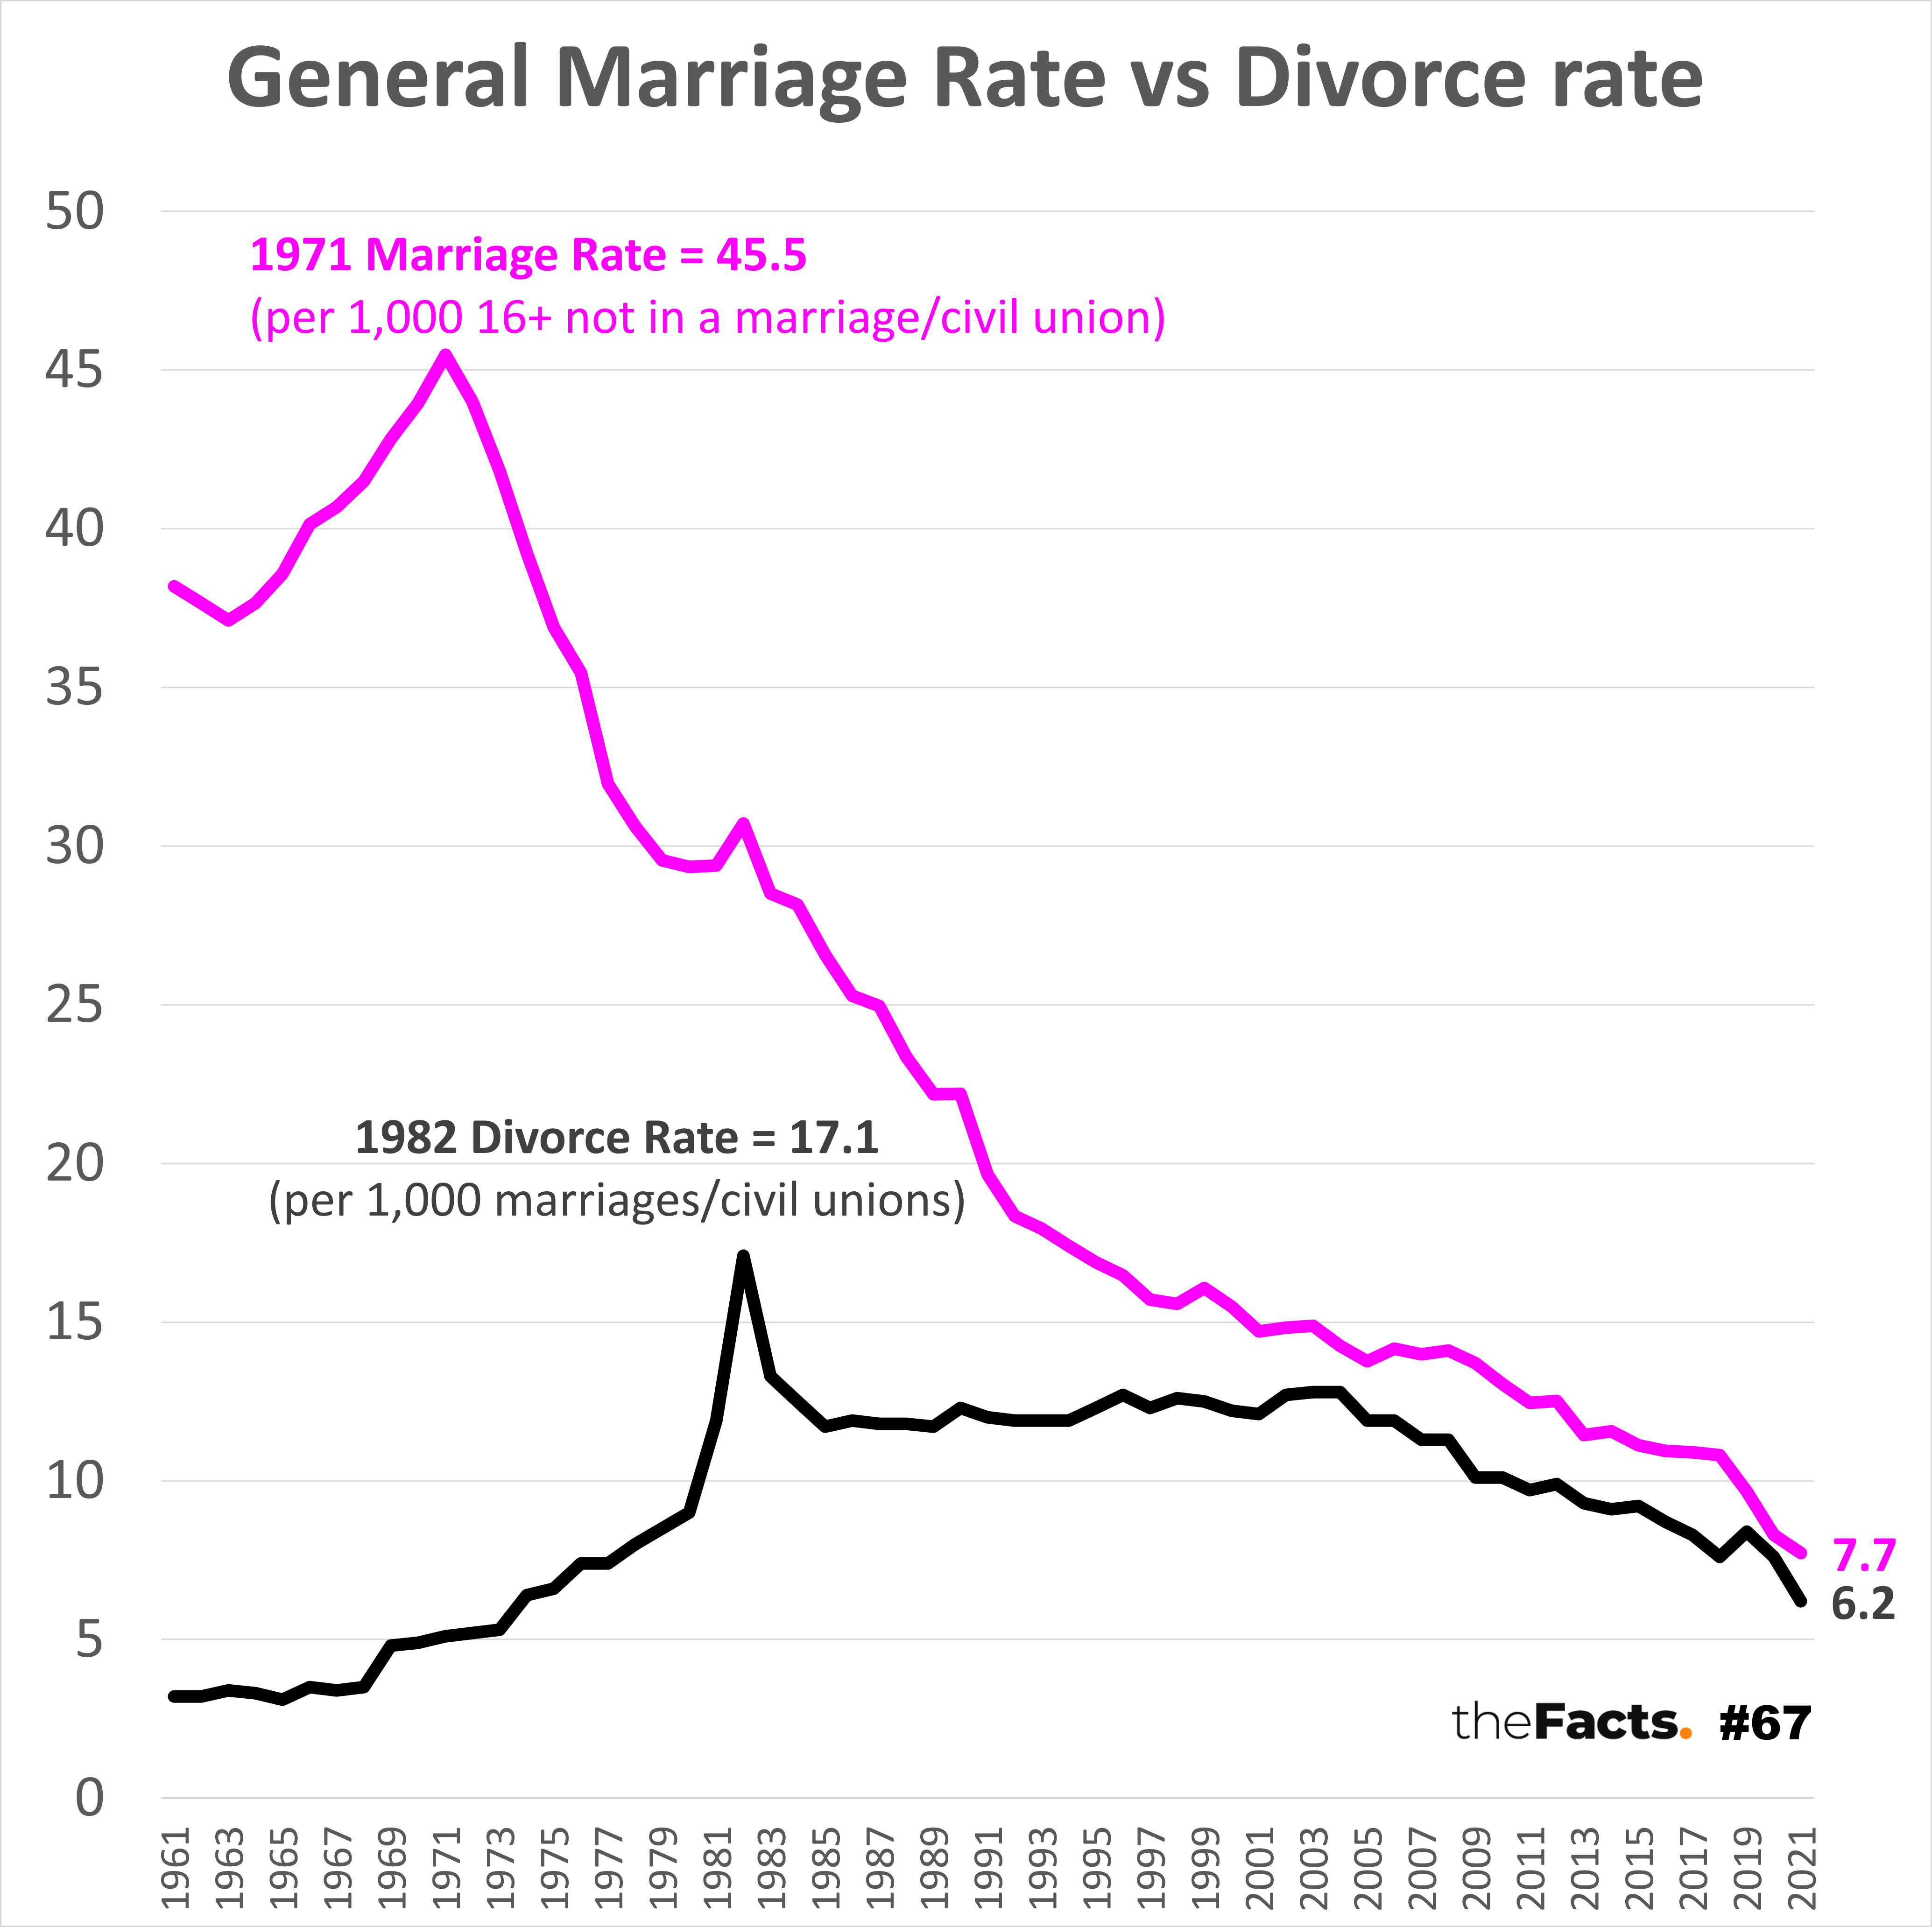 Marriage rate drops 6x in 50 years (divorce rate decreasing too